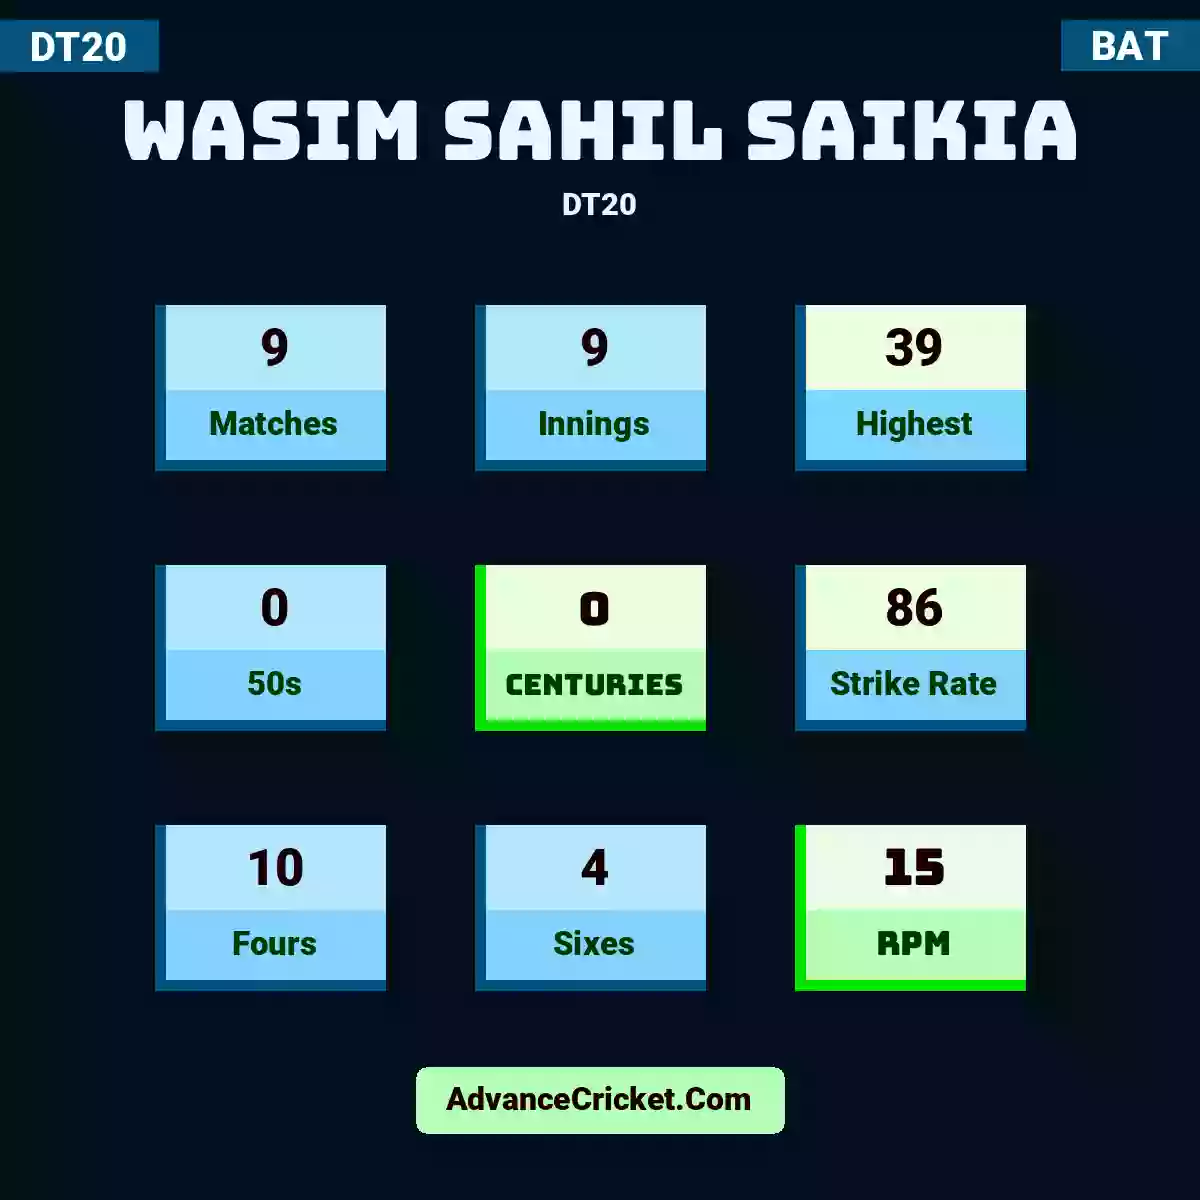 Wasim Sahil Saikia DT20 , Wasim Sahil Saikia played 9 matches, scored 39 runs as highest, 0 half-centuries, and 0 centuries, with a strike rate of 86. W.Sahil.Saikia hit 10 fours and 4 sixes, with an RPM of 15.